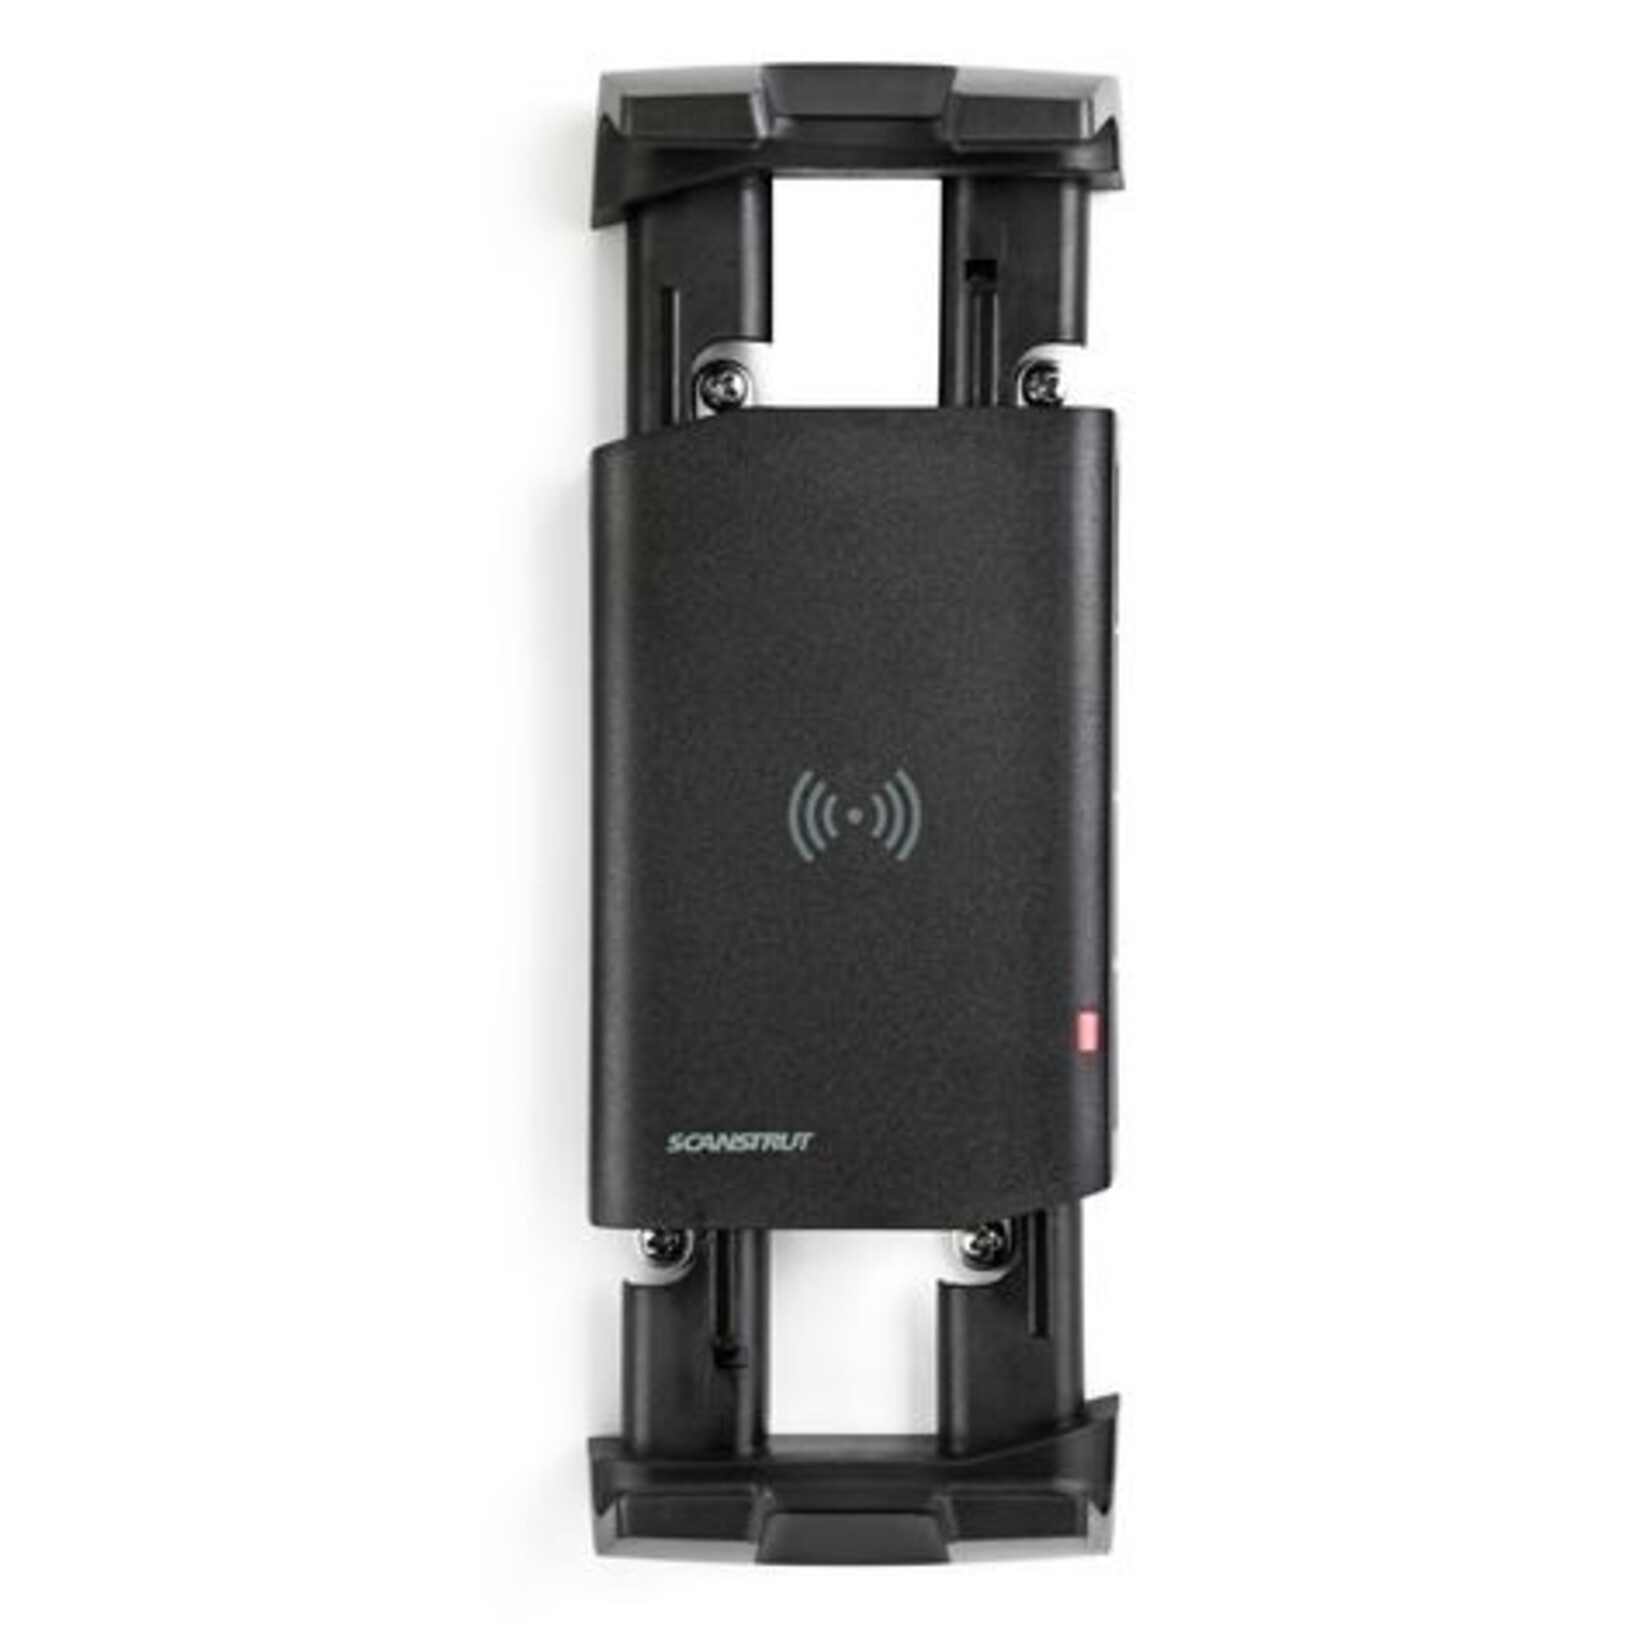 Scanstrut ROKK Wireless - Active. Waterproof wireless charger 12/24V